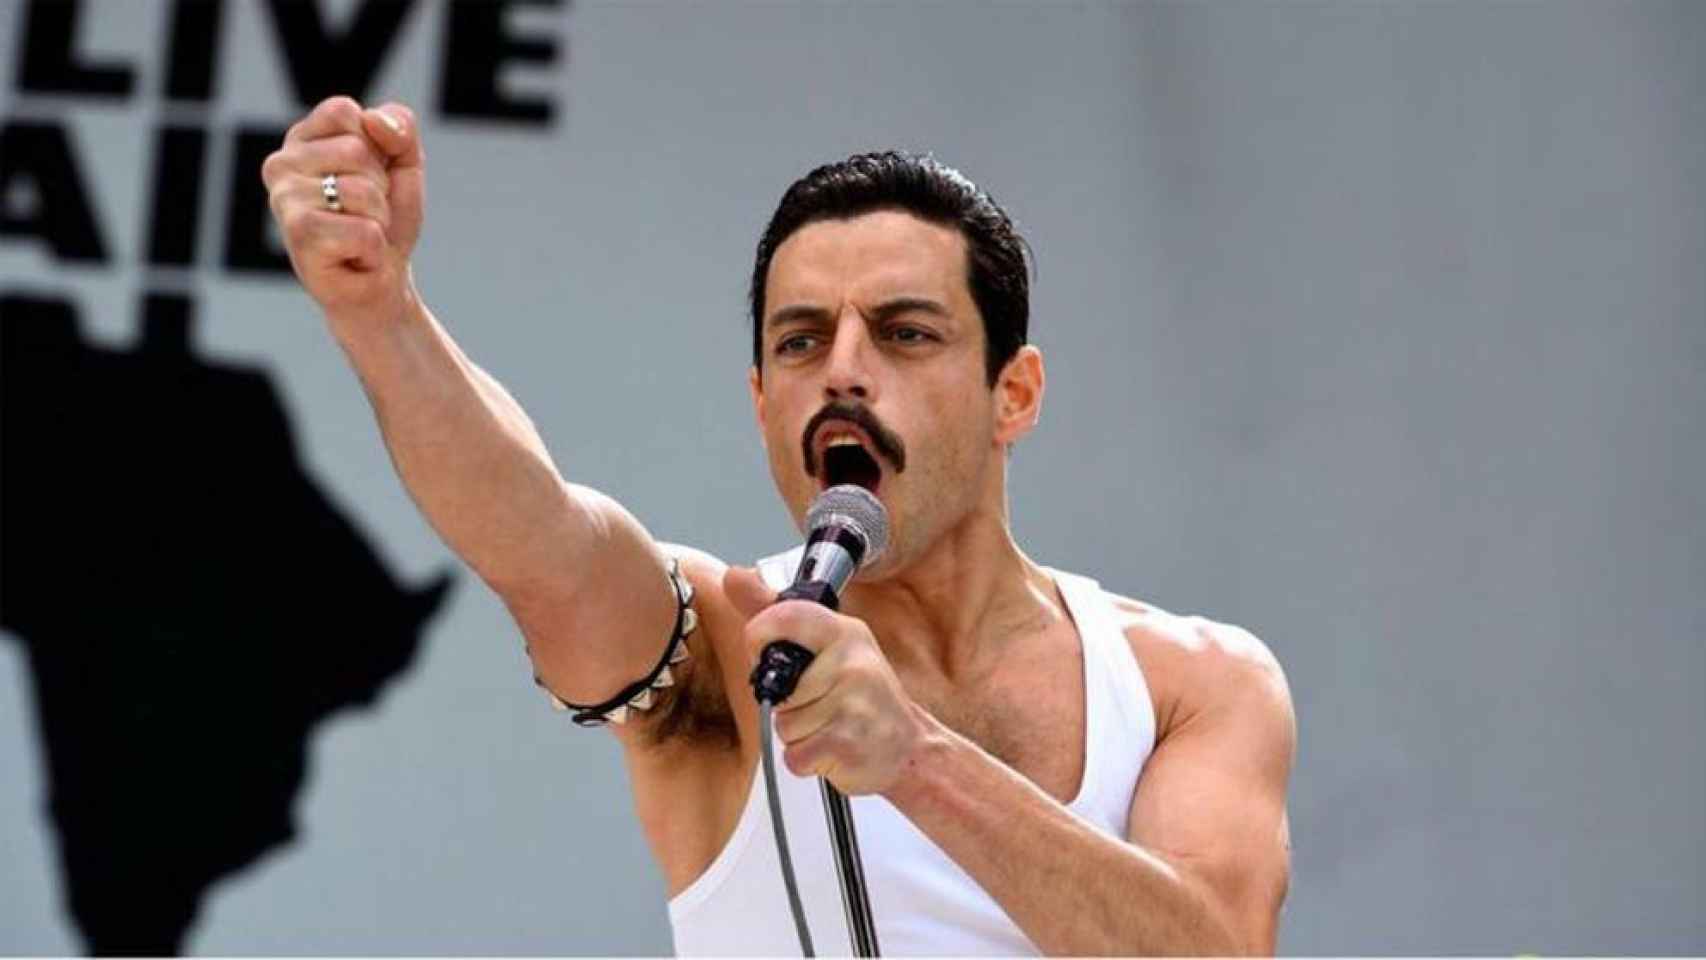 Rami Malek como Freddie Mercury.